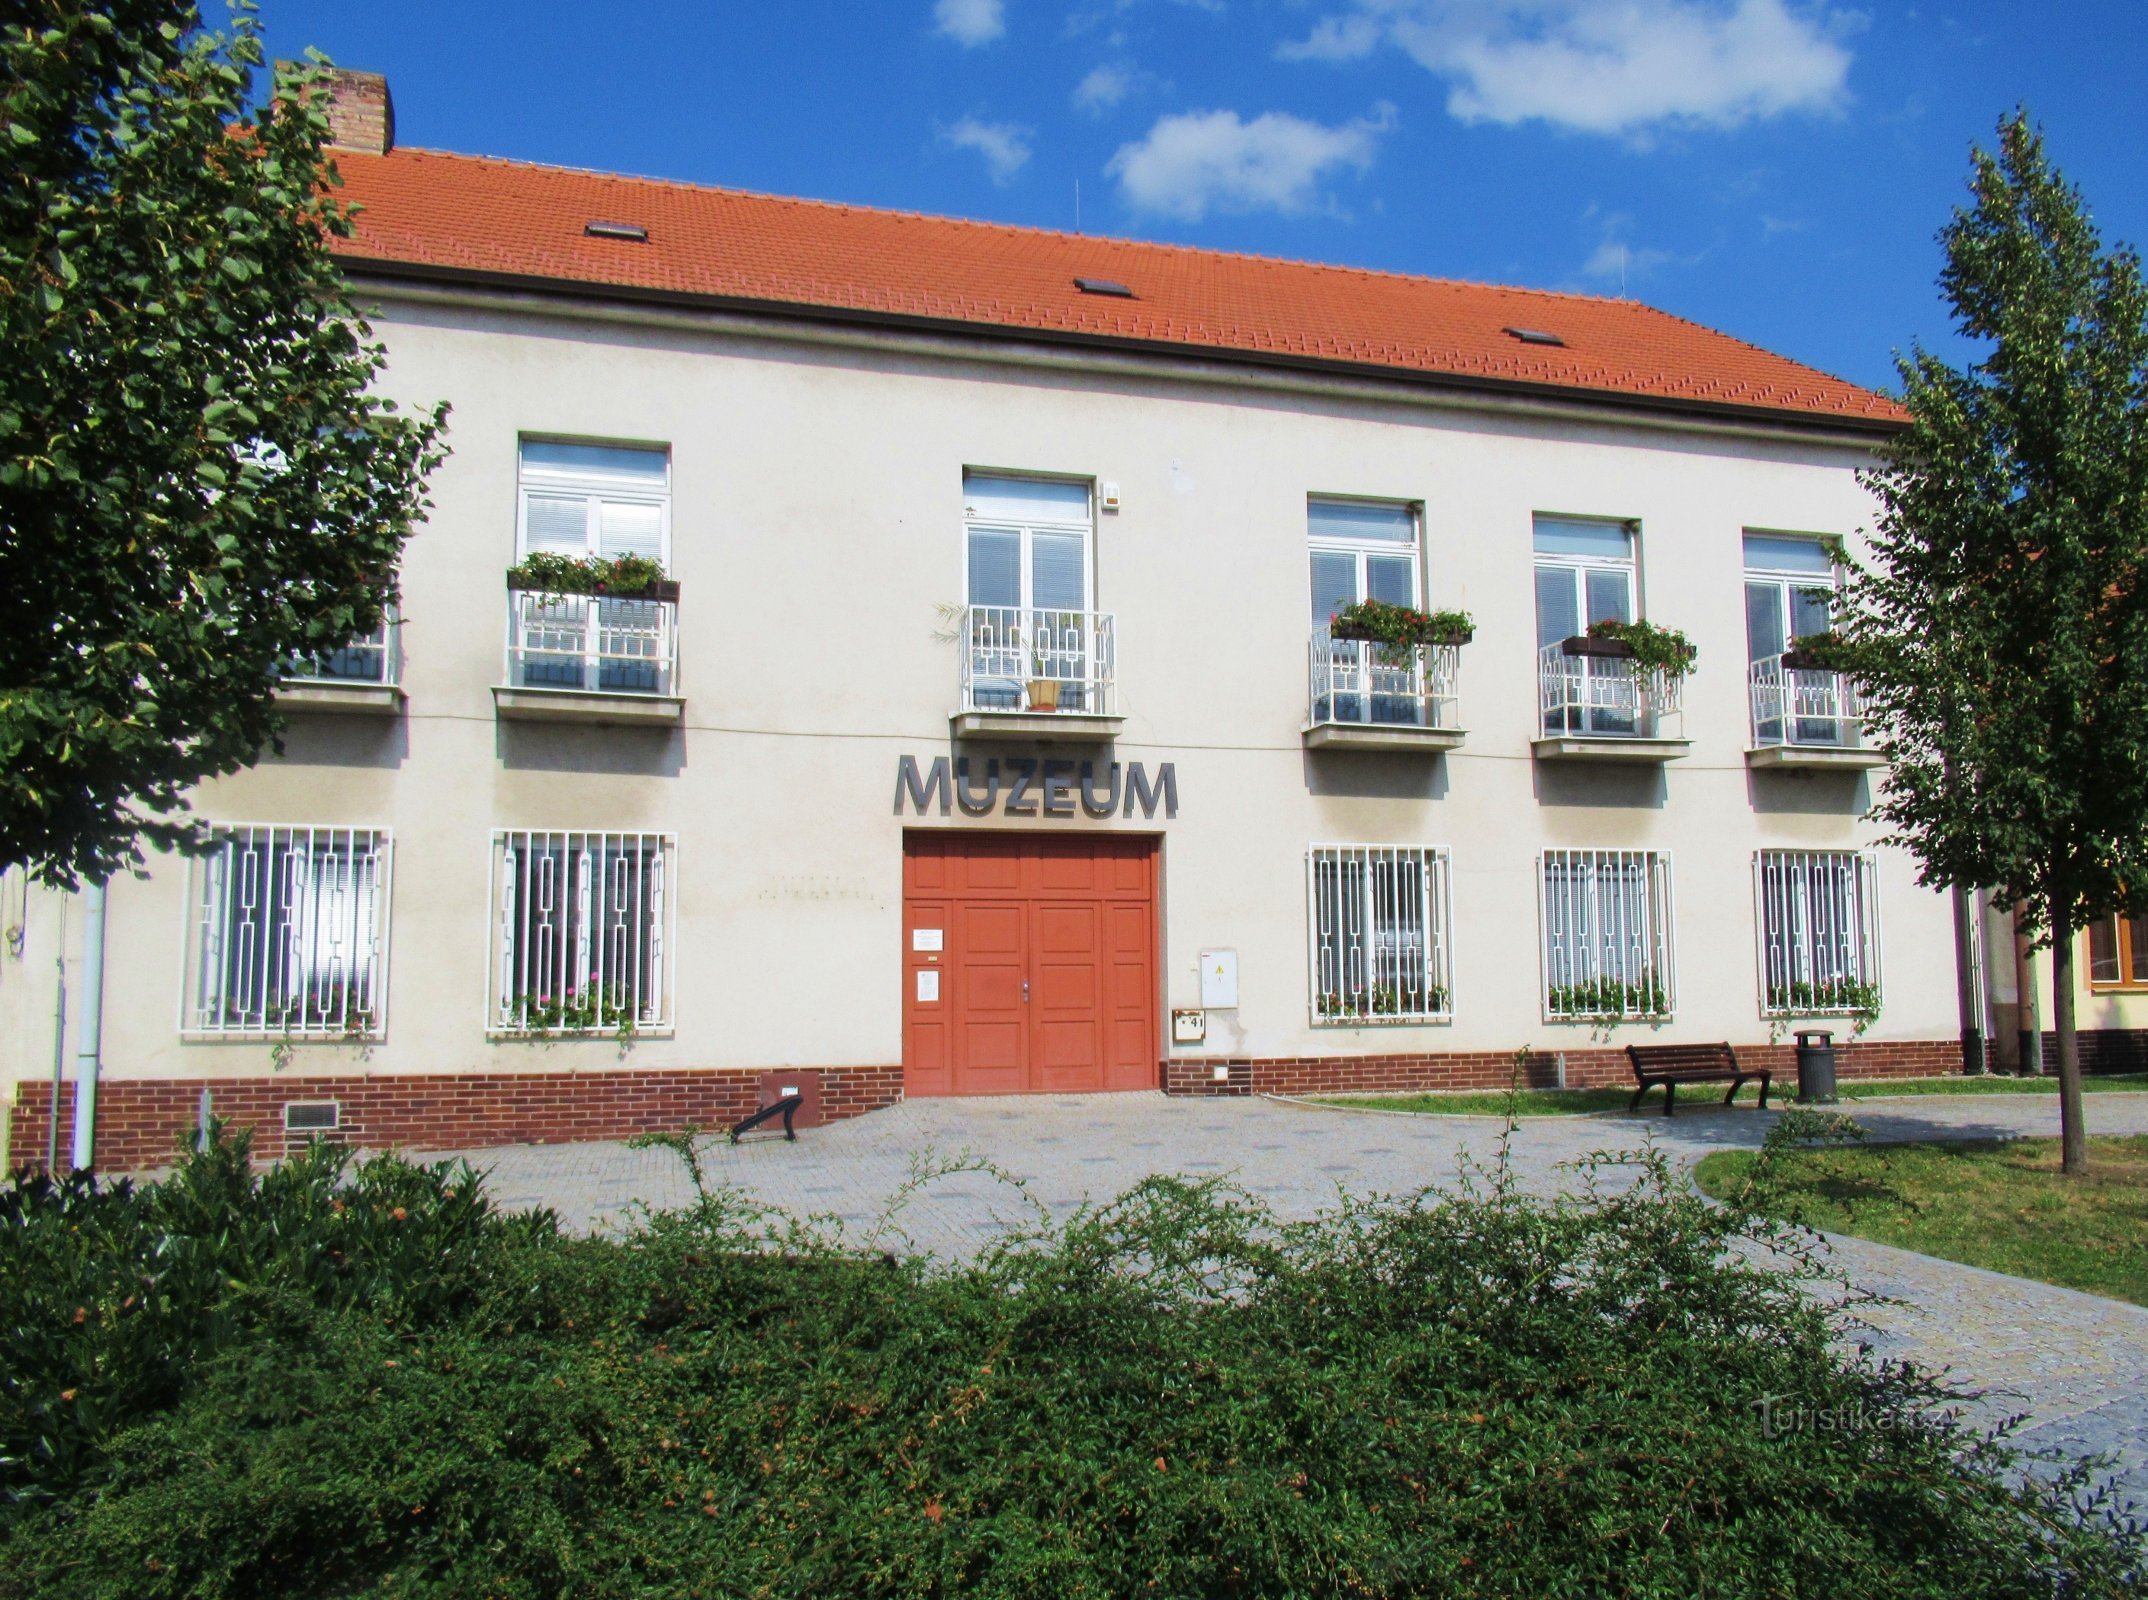 Masaryk Museum